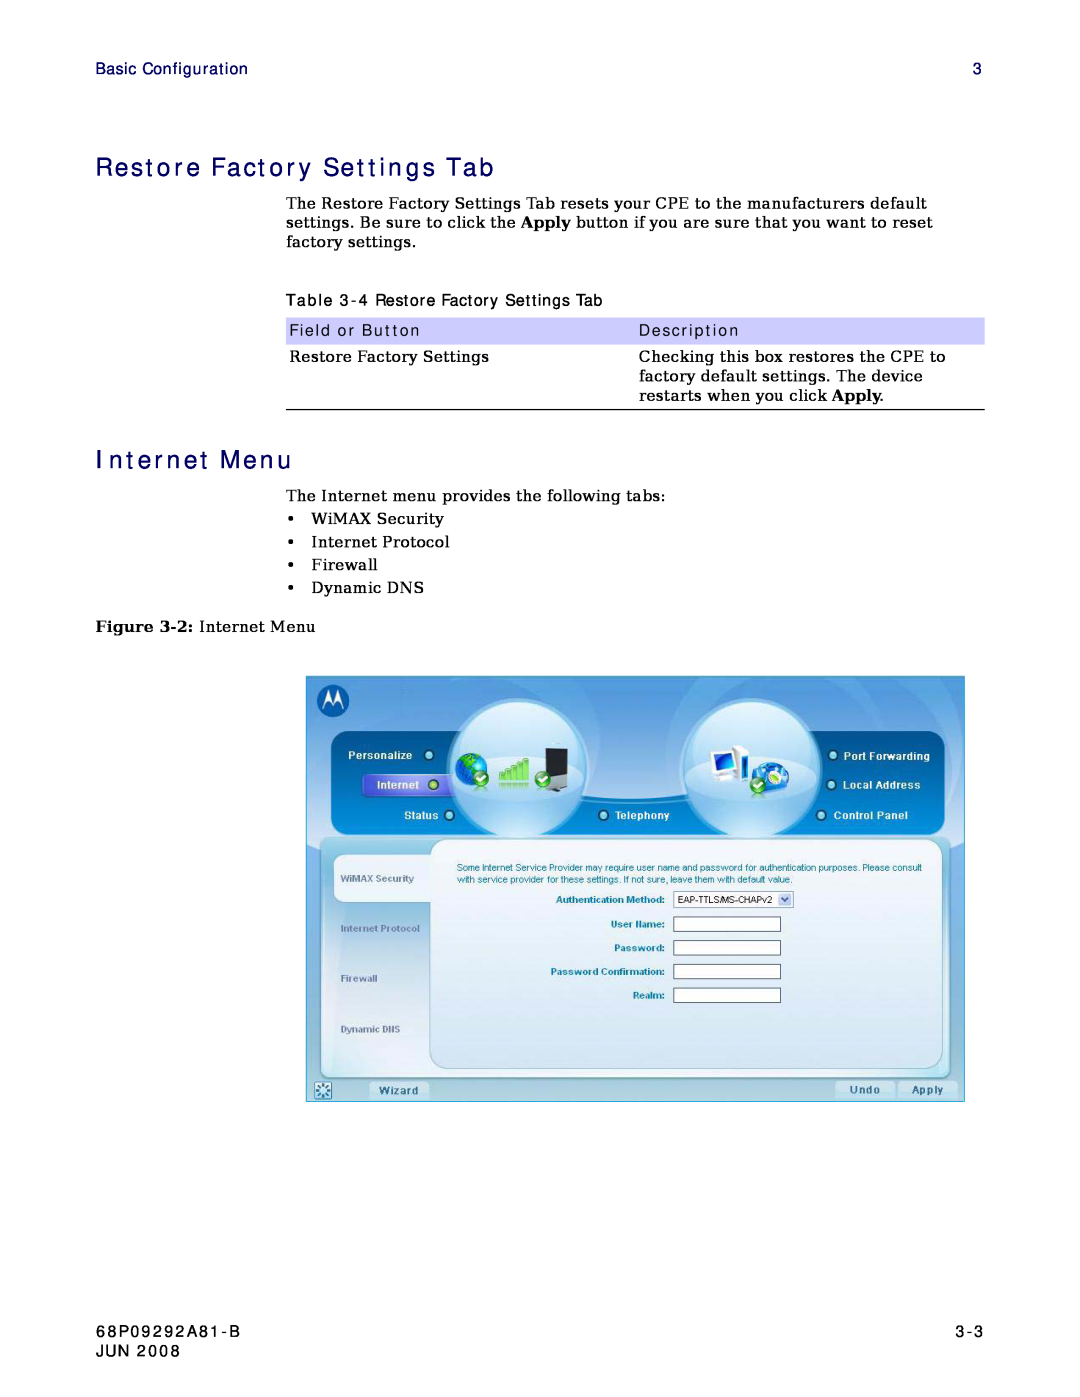 Motorola CPEI 750 manual Restore Factory Settings Tab, Internet Menu, Basic Configuration, Field or Button, Description 